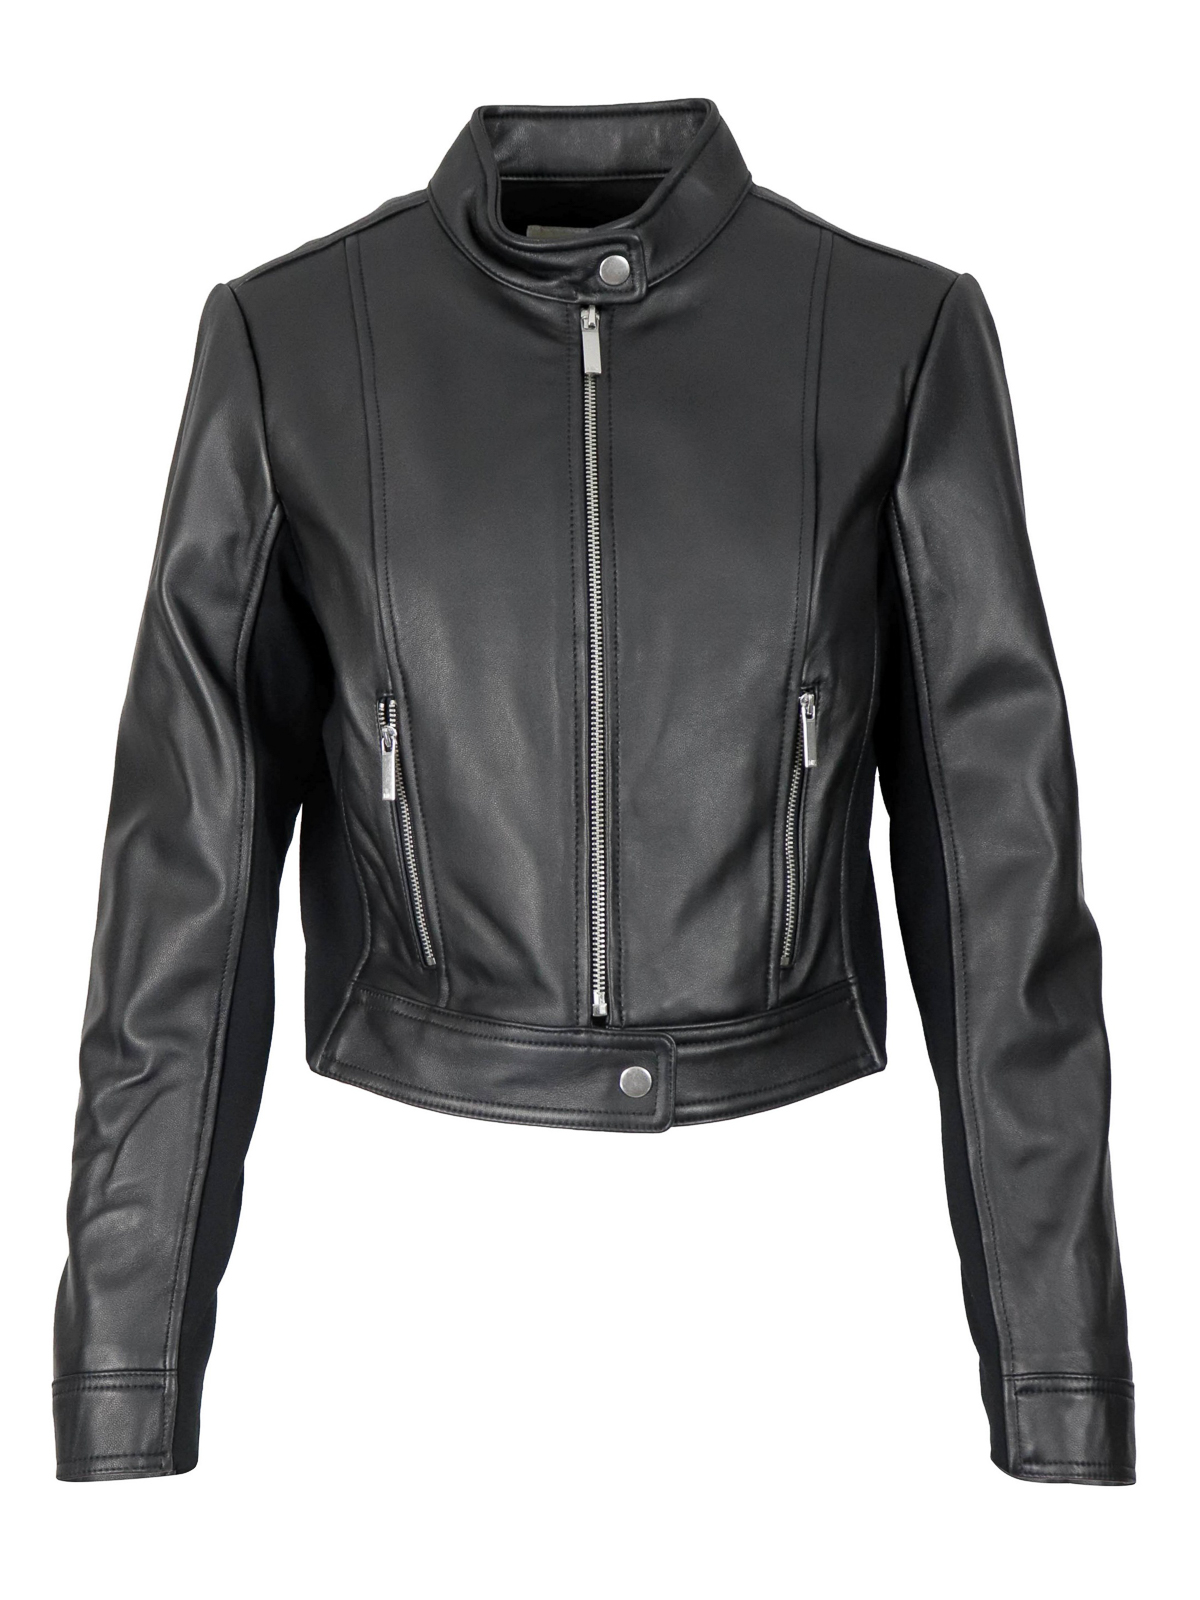 Michael Kors - Ponti Combo leather jacket - leather jacket - MB92J0B8FX001